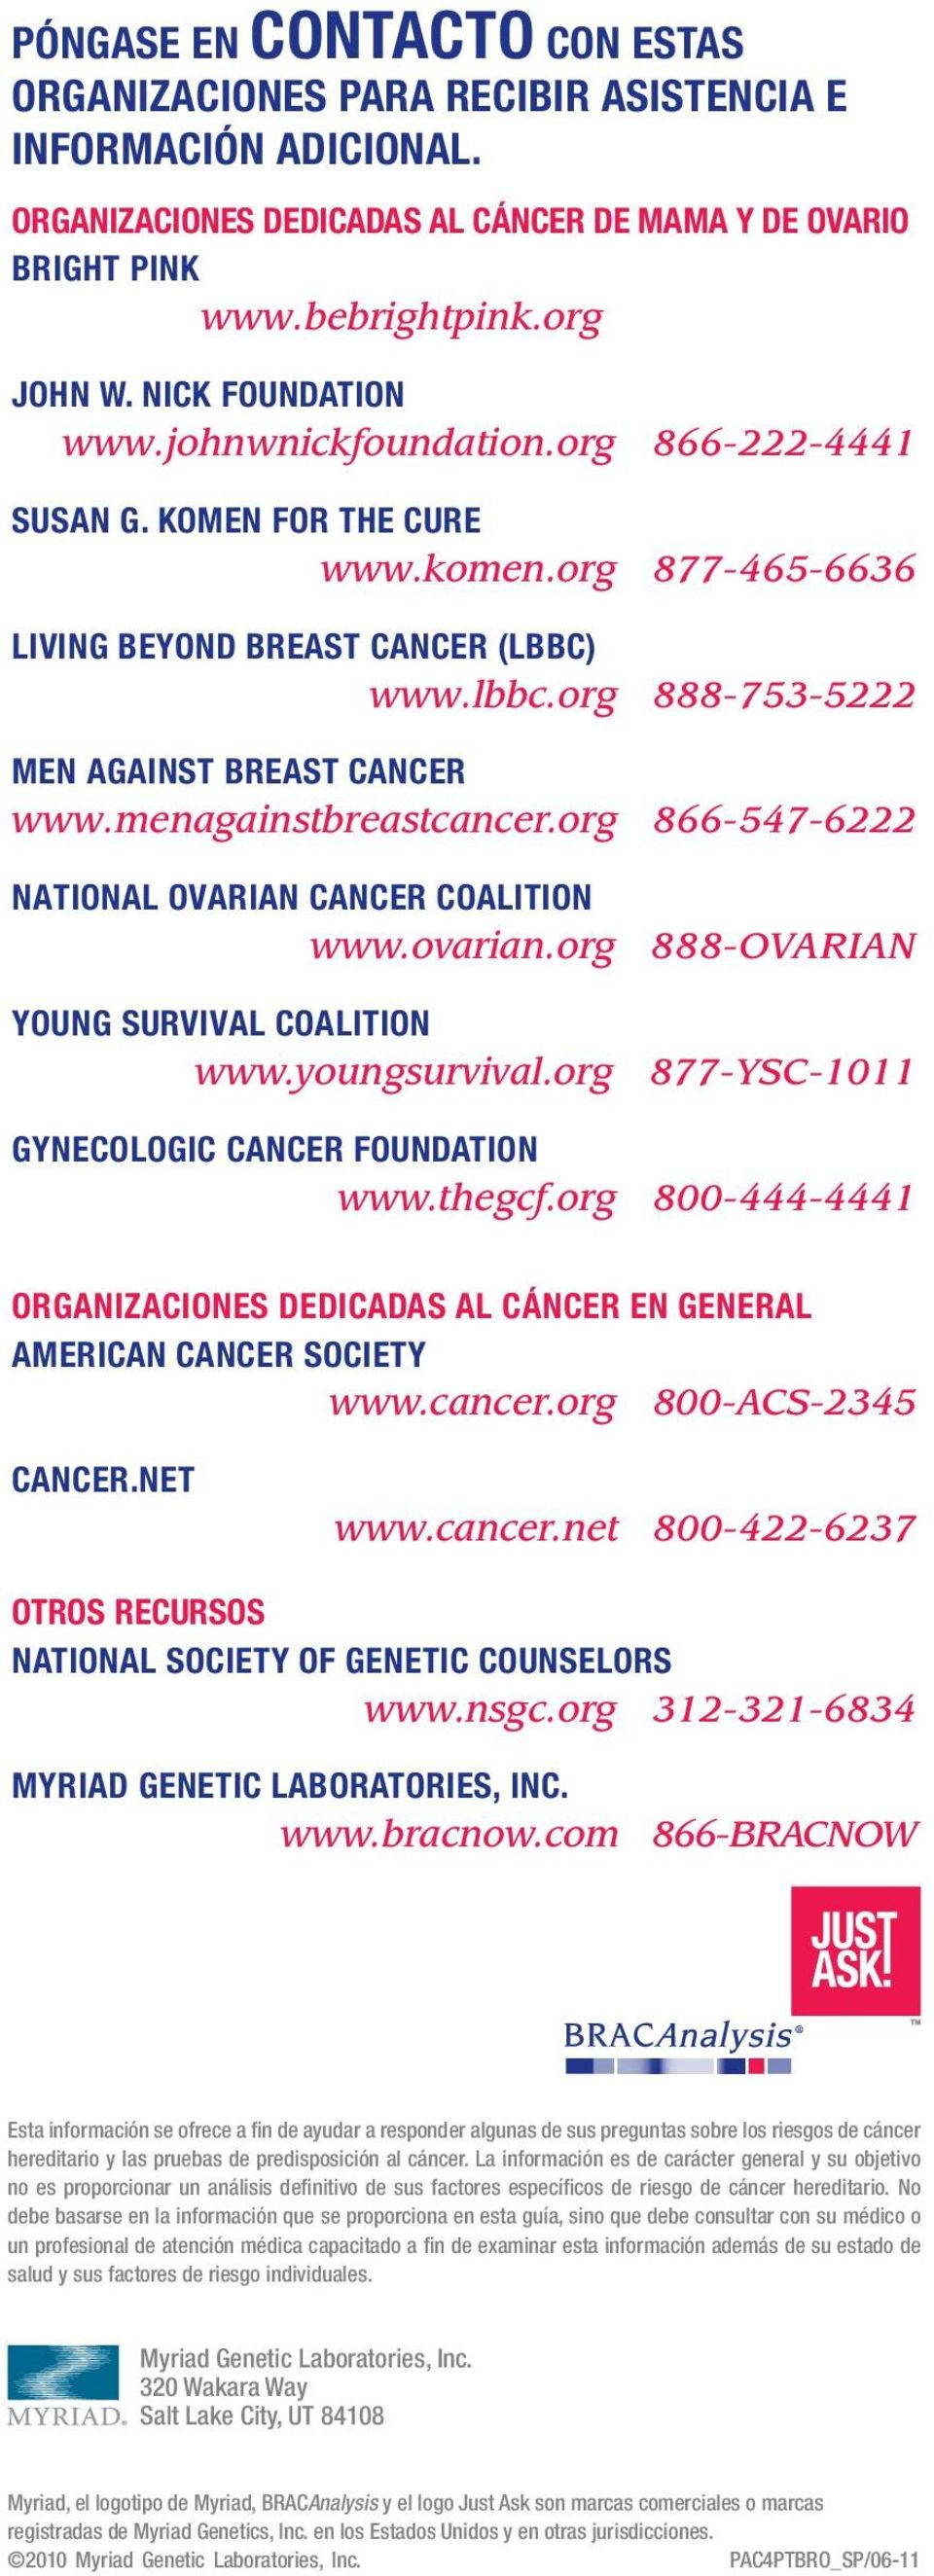 org 888-753-5222 men against breast cancer www.menagainstbreastcancer.org 866-547-6222 National Ovarian Cancer Coalition www.ovarian.org 888-OVARIAN Young Survival Coalition www.youngsurvival.